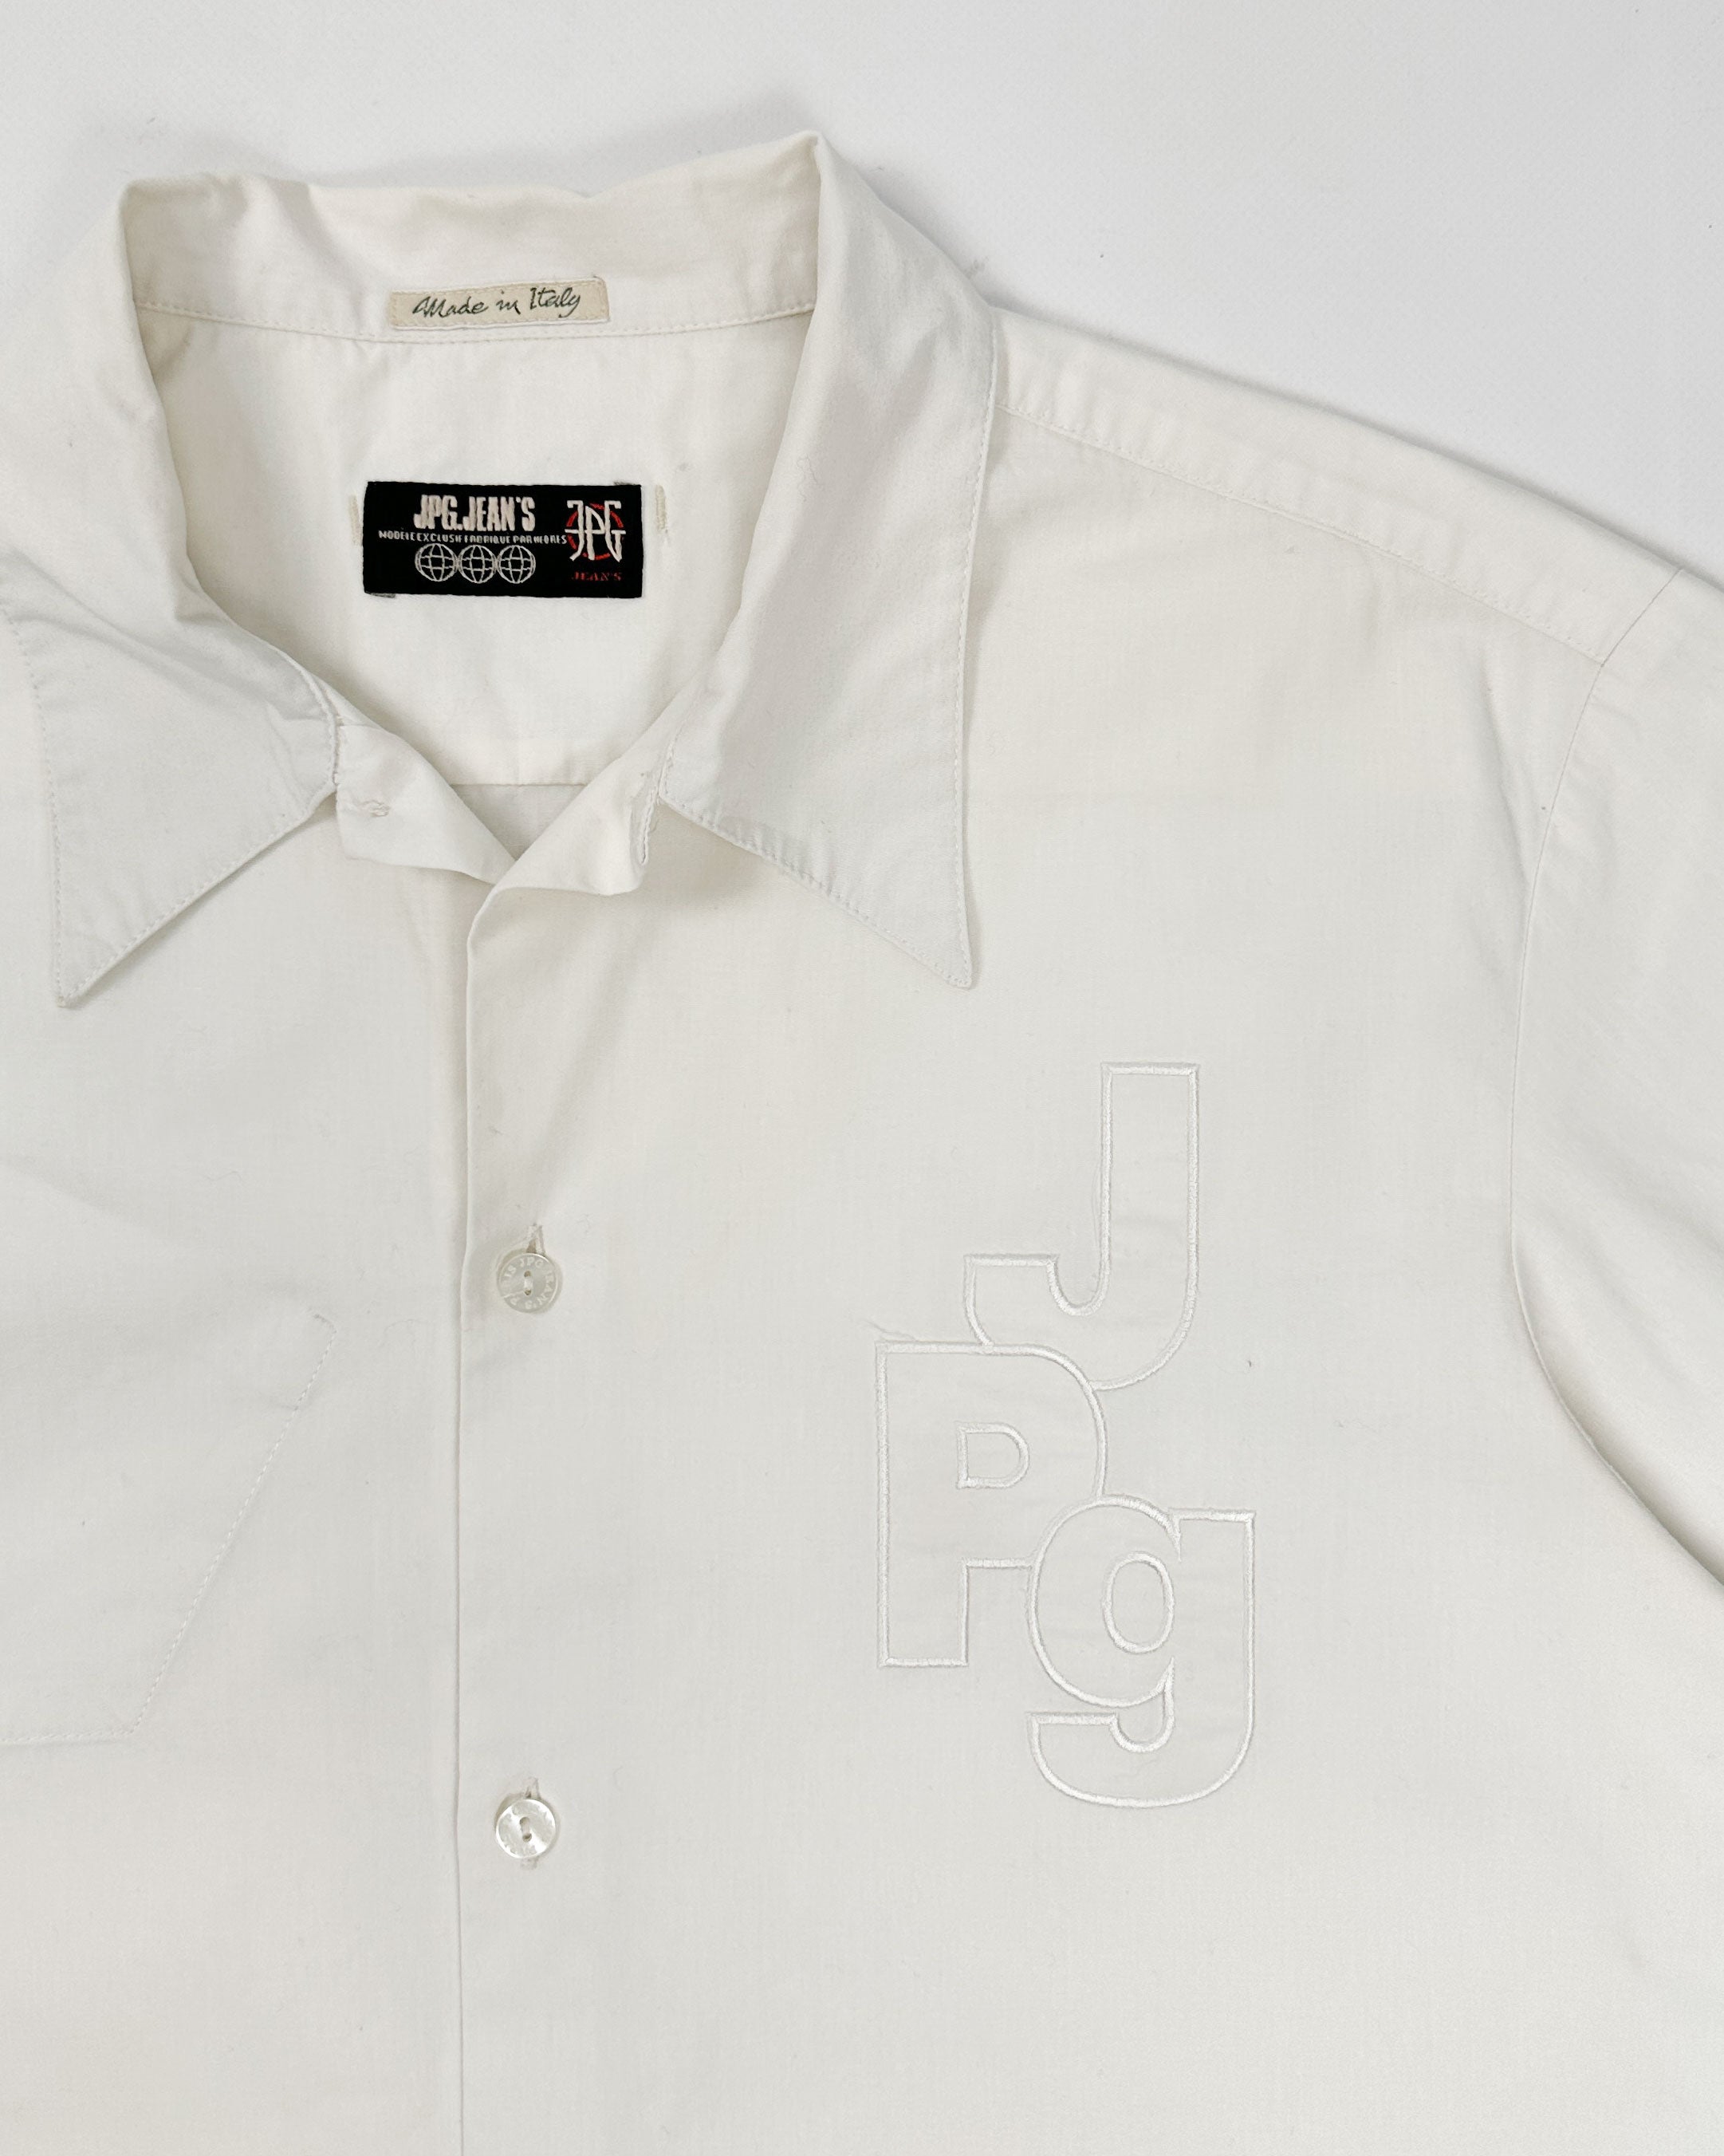 Jean Paul Gaultier White Short Sleeve Shirt 1990's – Vintage TTS